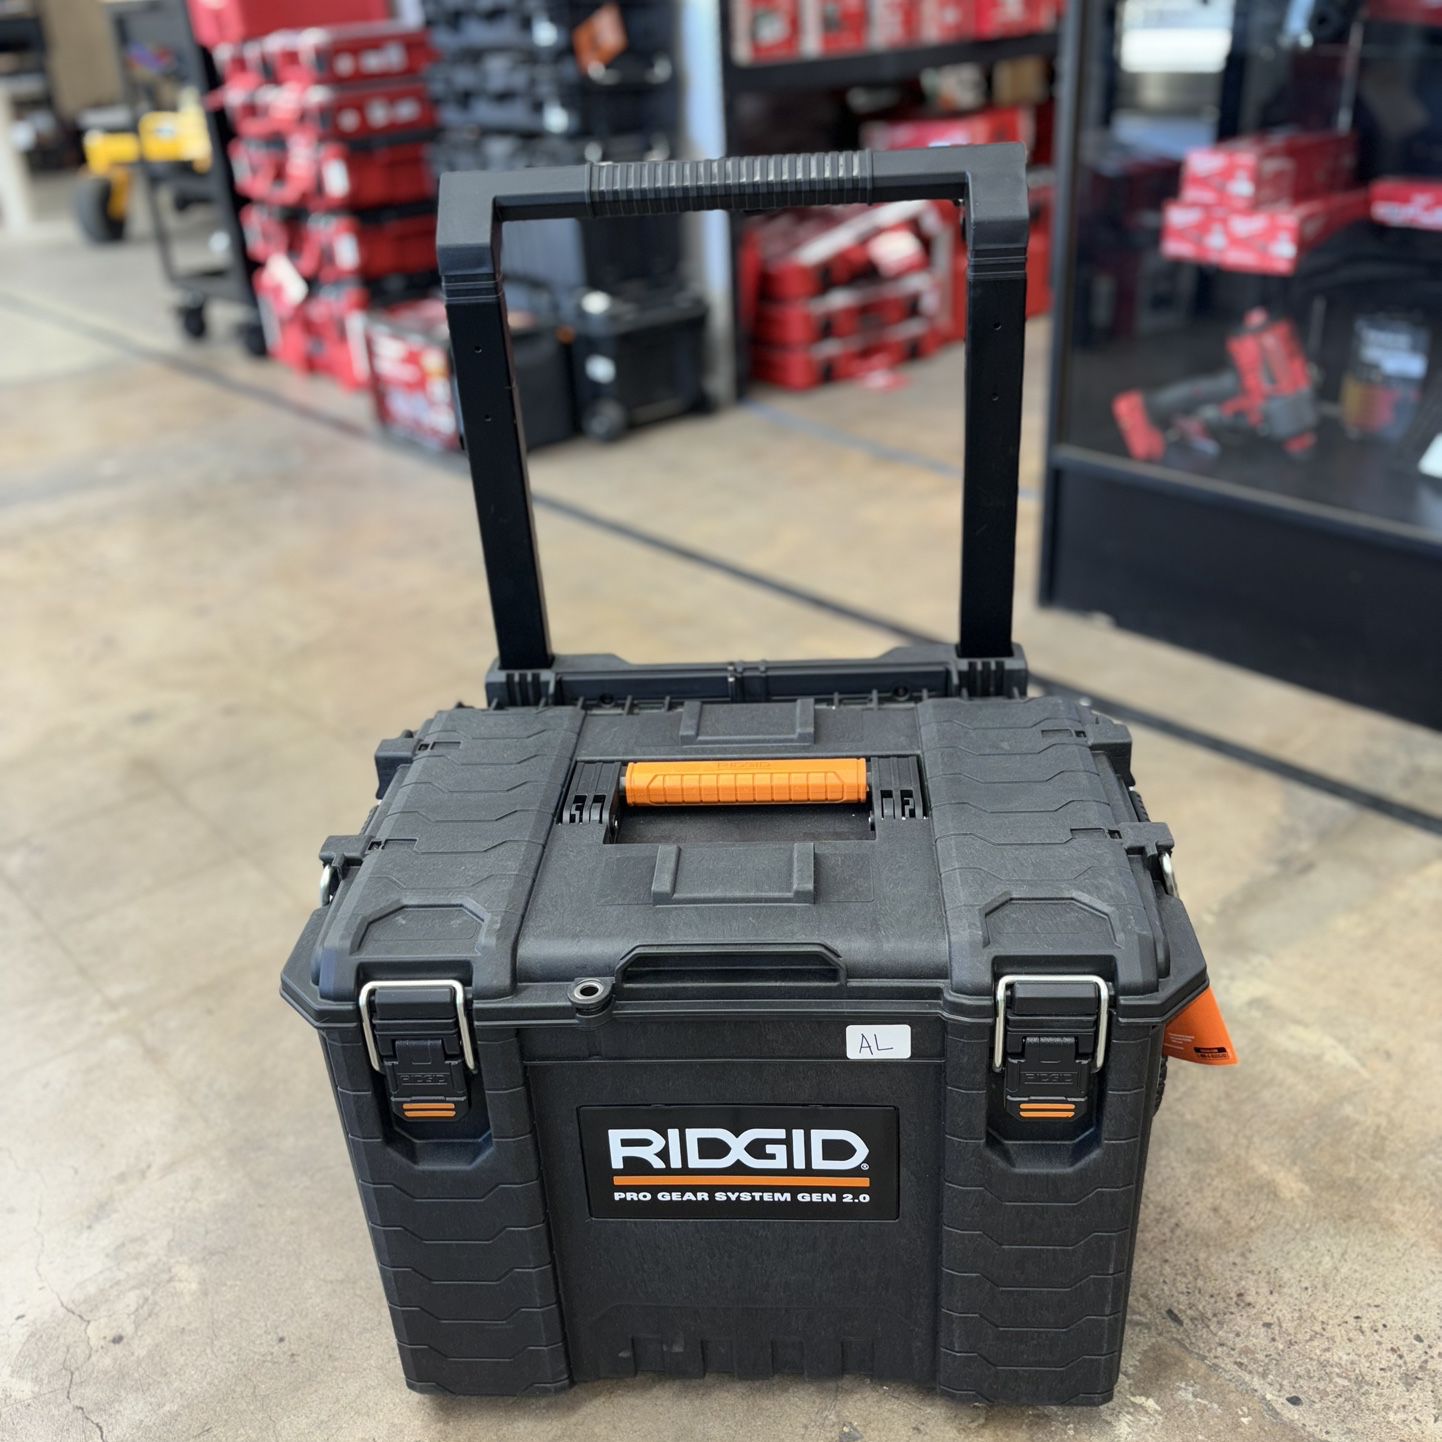 RIDGID 2.0 Pro Gear System 25 in. All Terrain Rolling Tool Cart